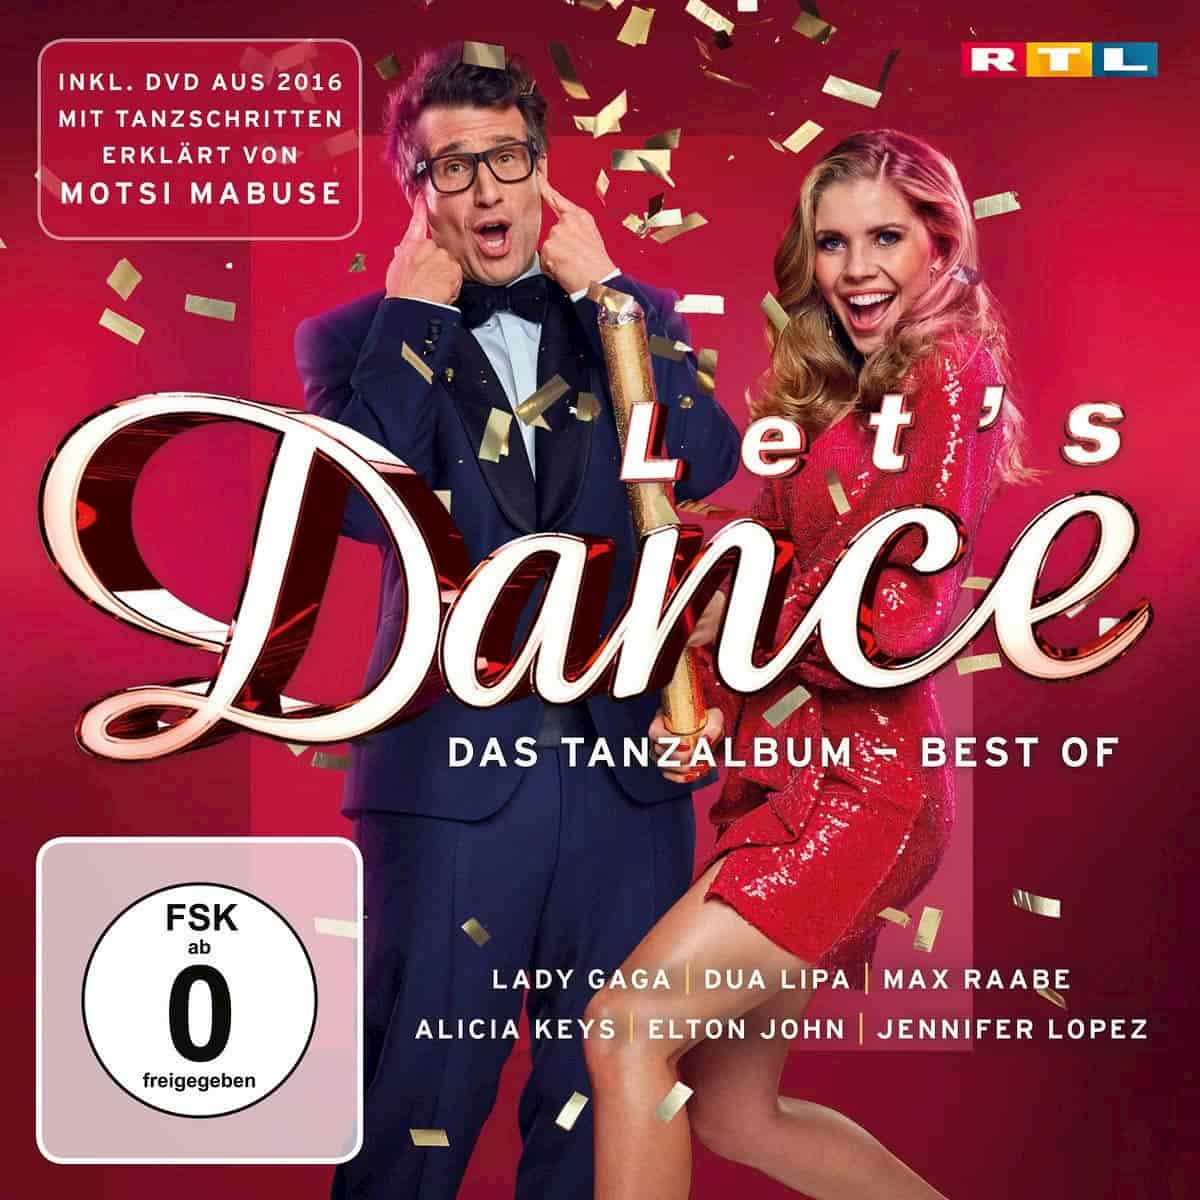 Let’s dance CD 2020 - Best of Let's dance - Das Tanz-Album